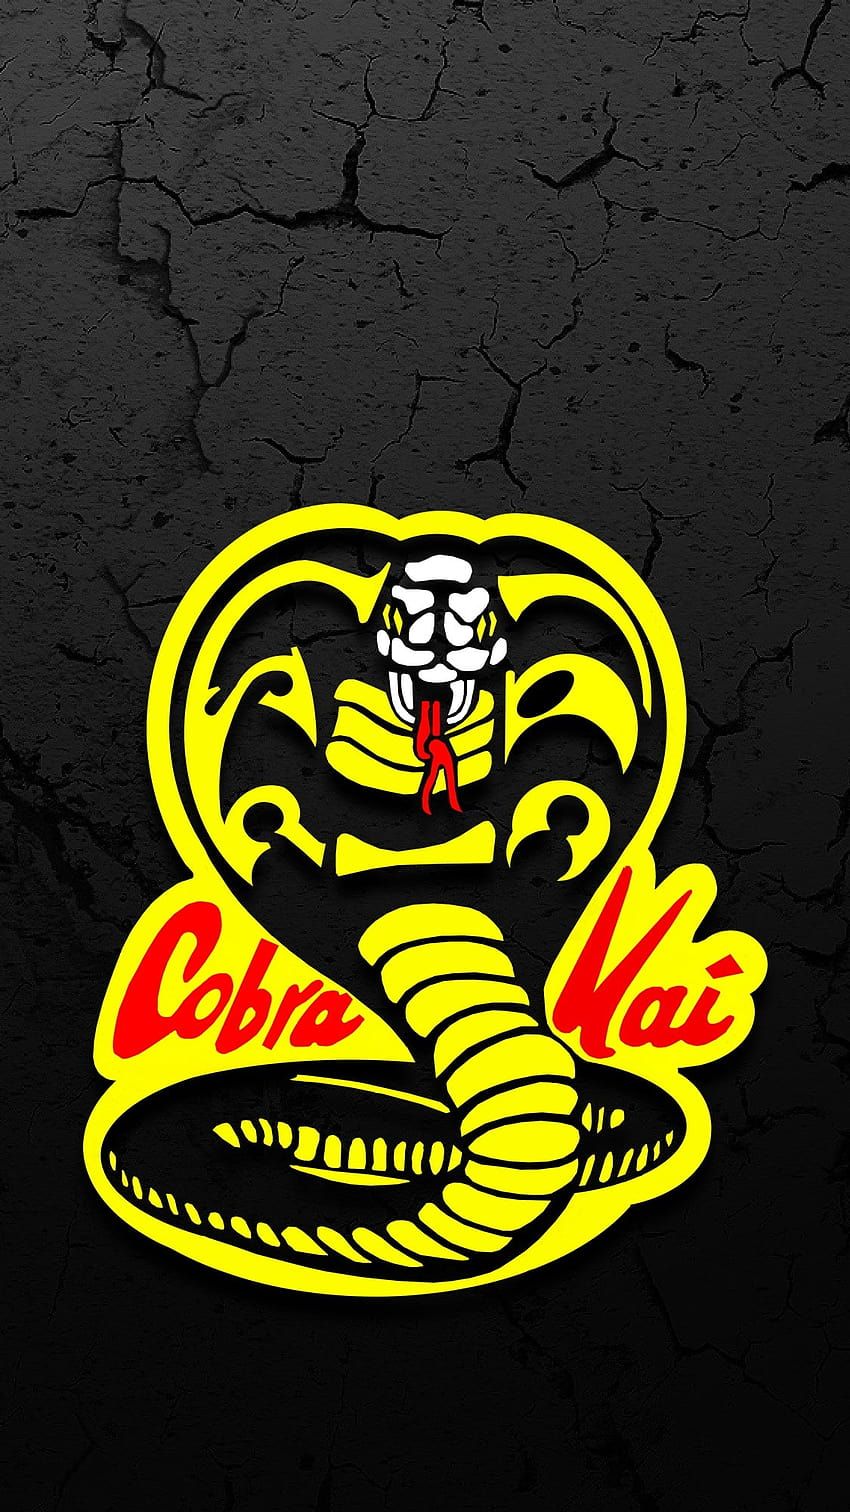 A wallpaper of the cobra kai logo from the Karate Kid movies - Cobra Kai